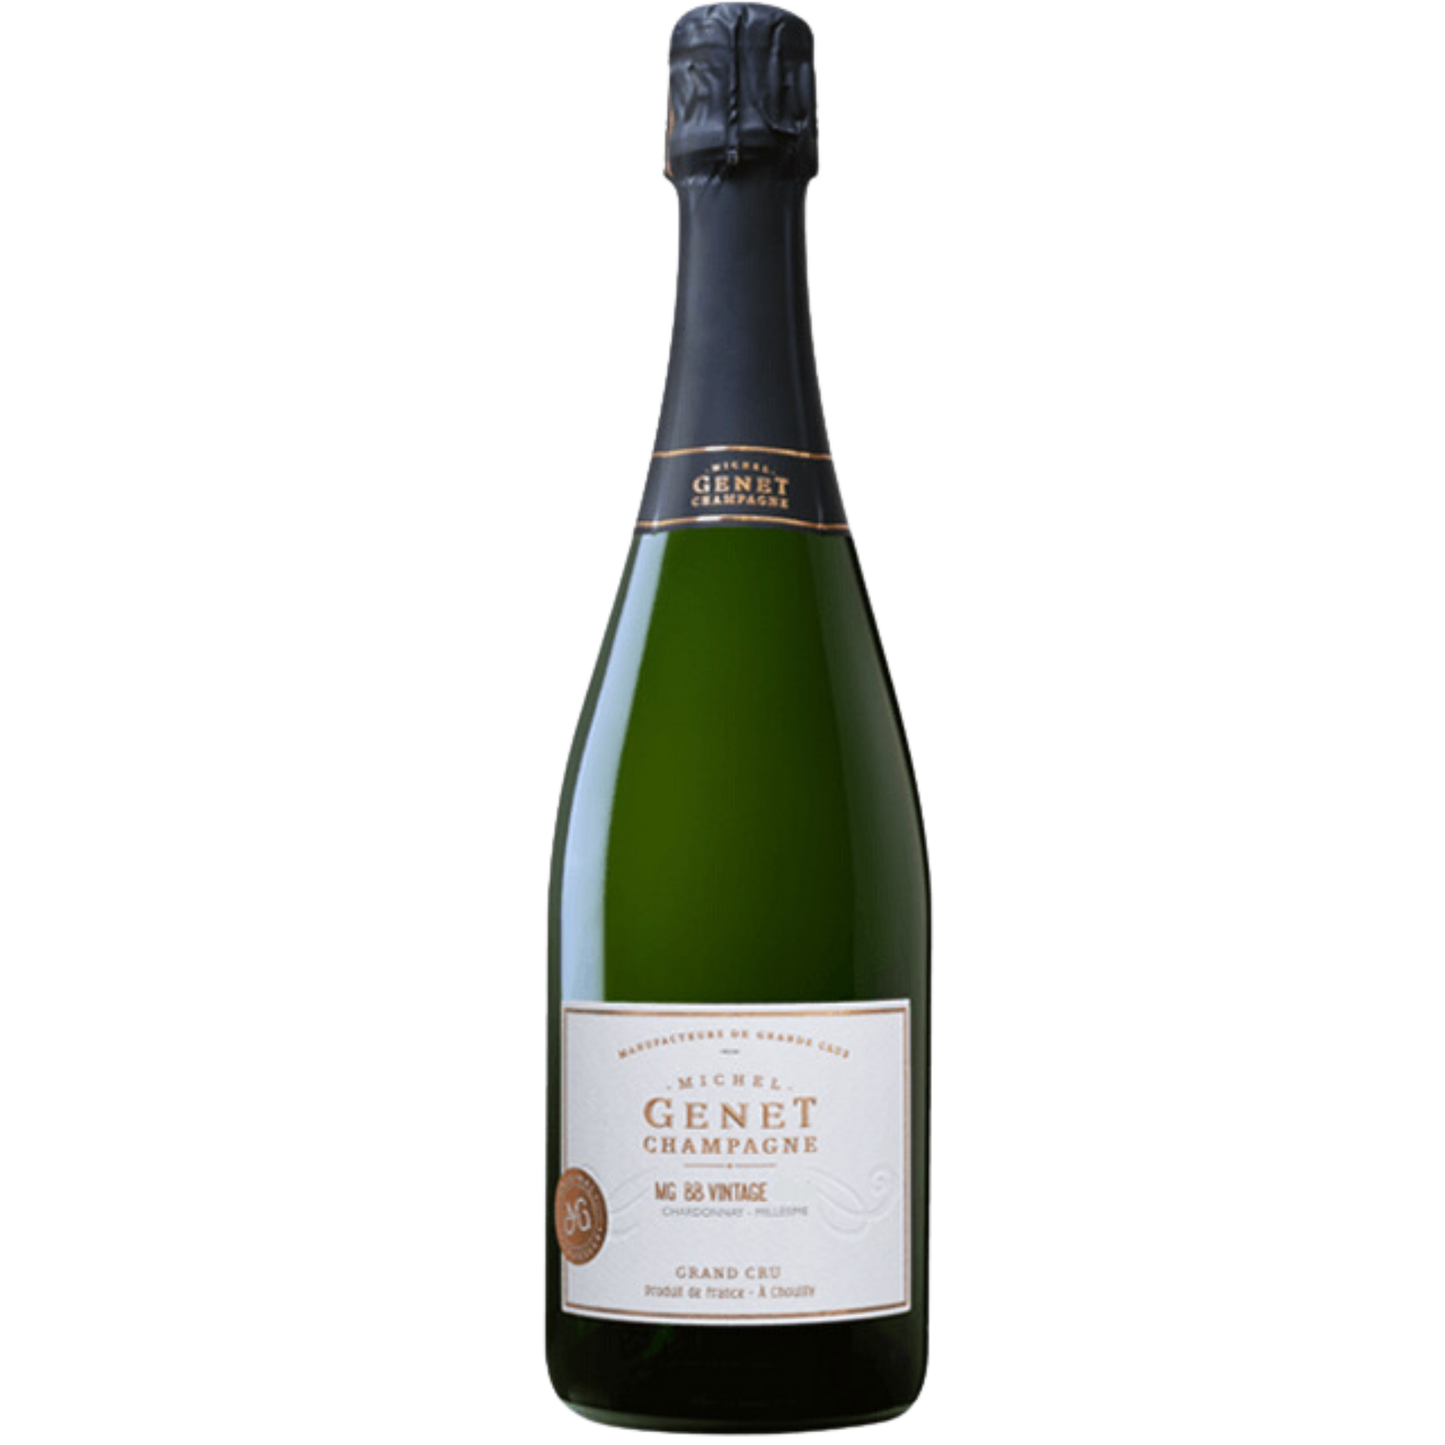 Michel Genet MG BB Vintage Grand Cru Champagne 2015